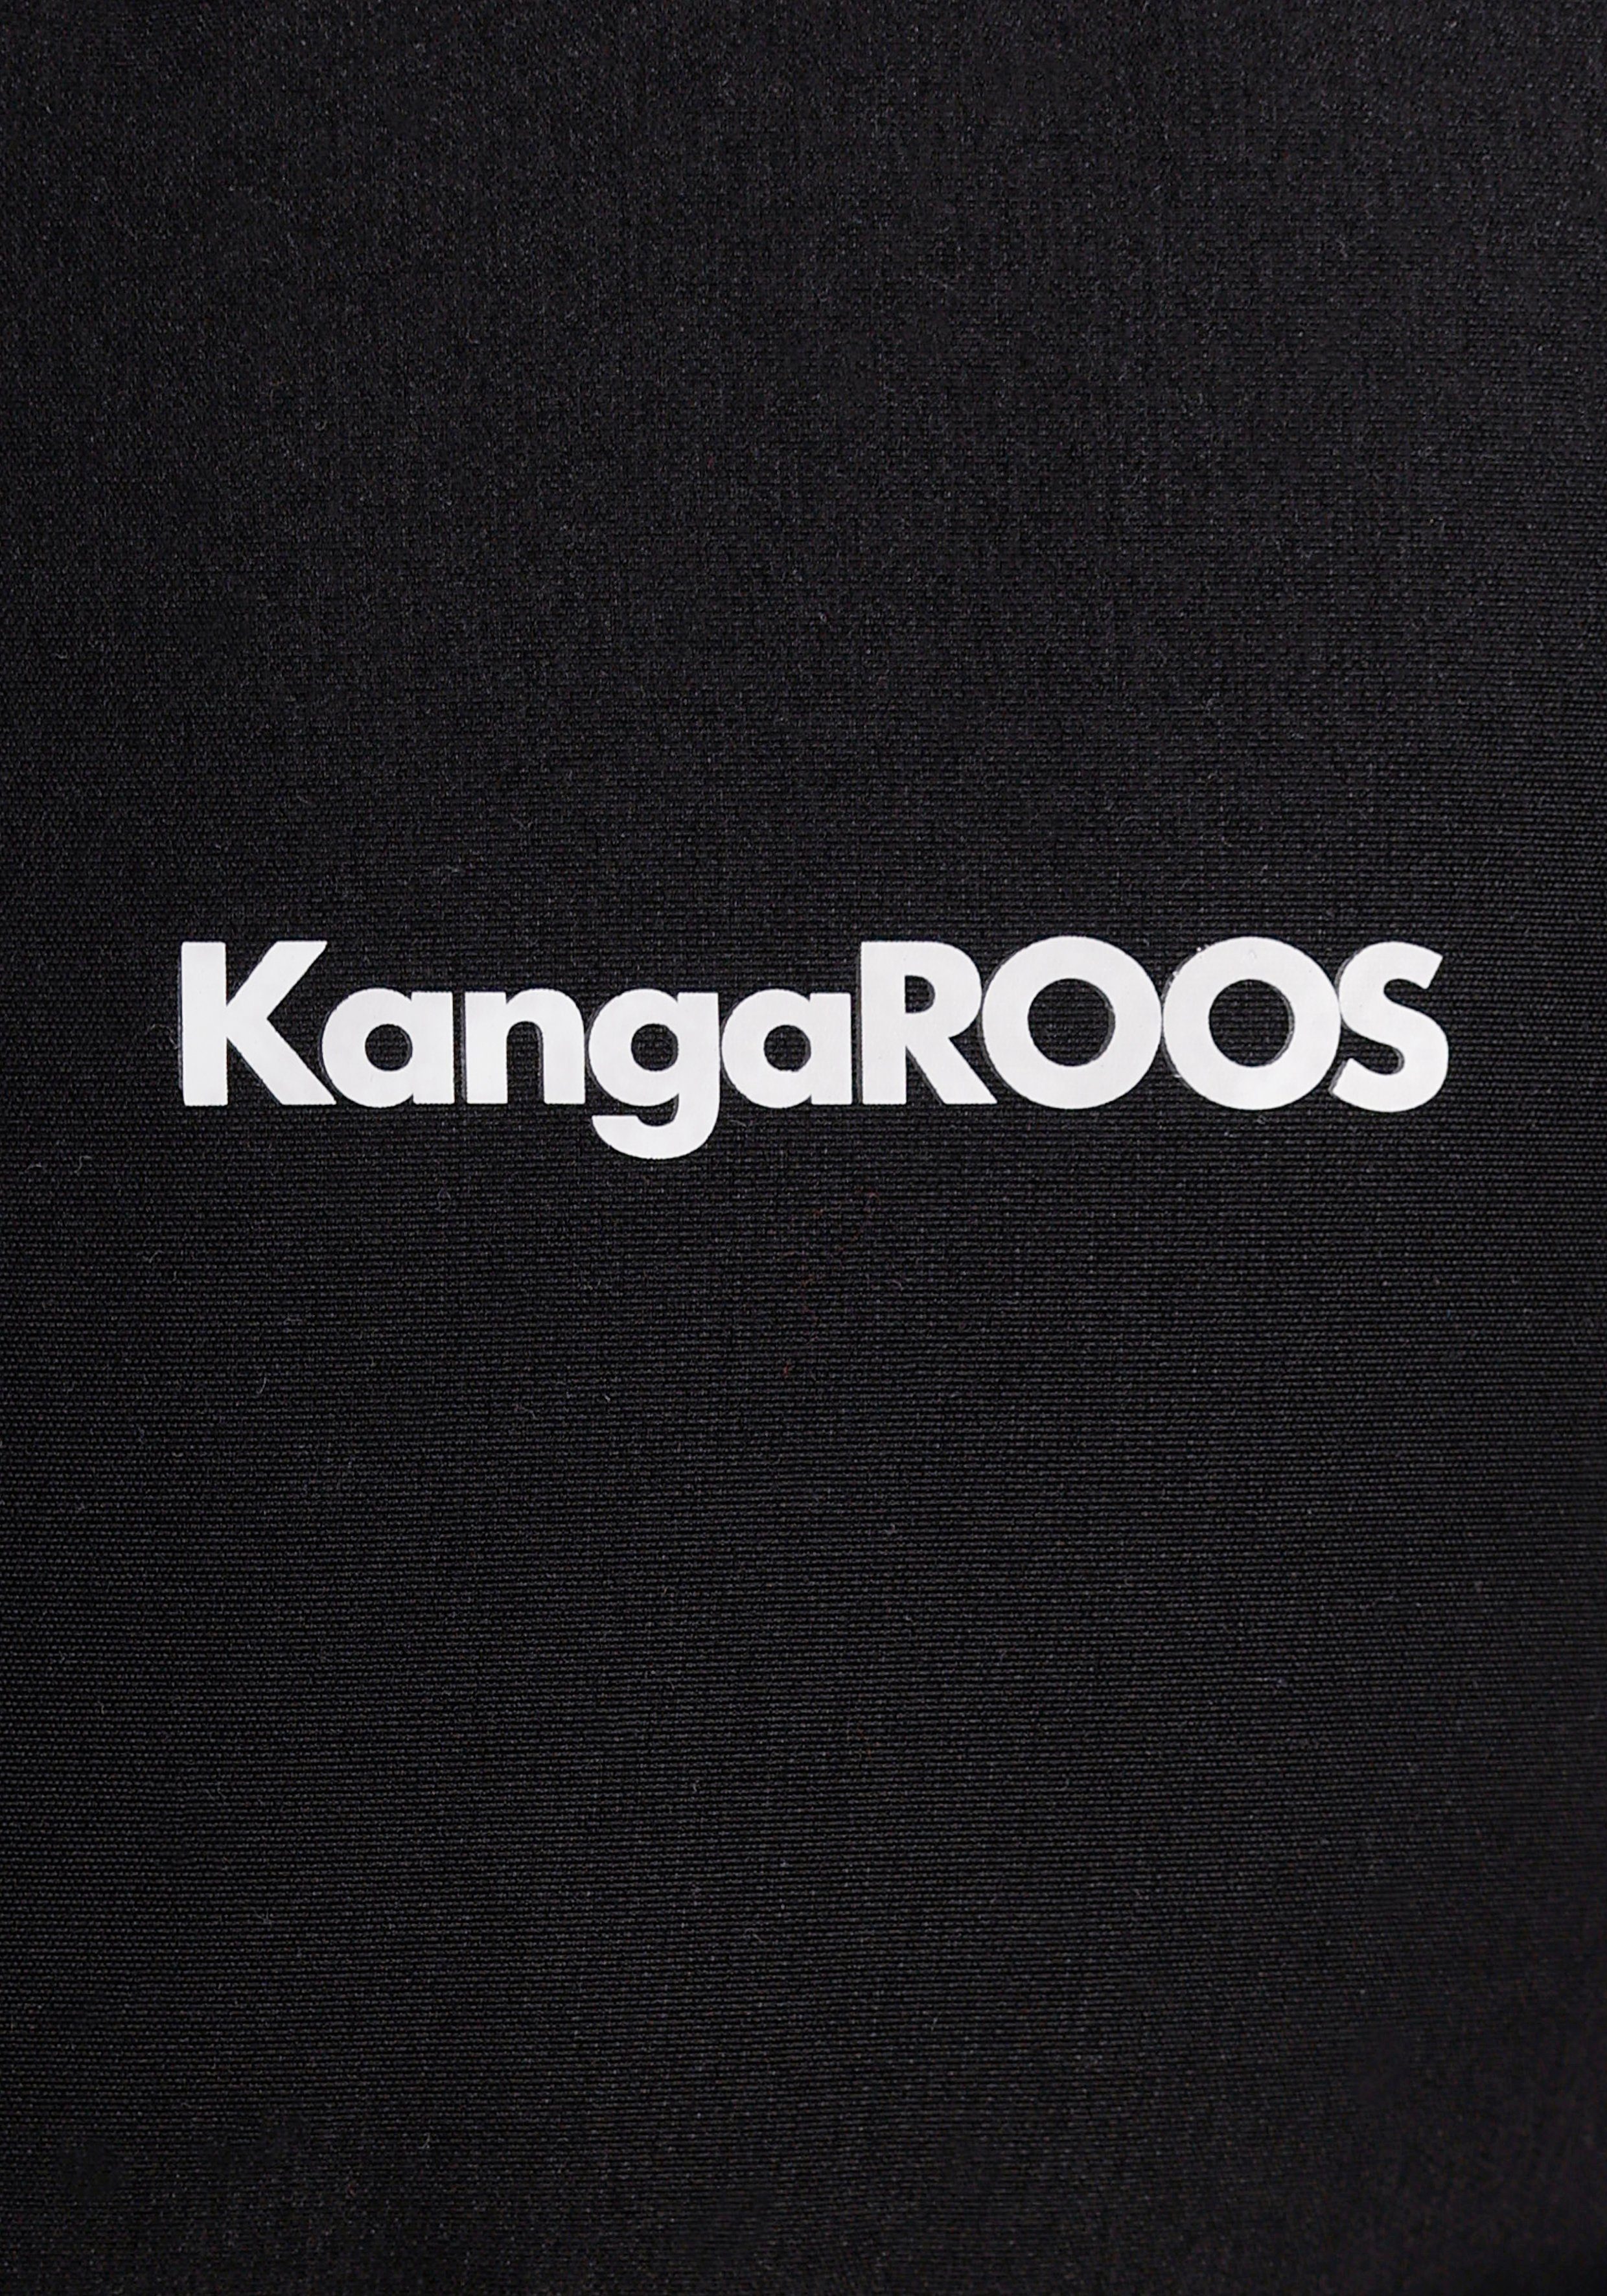 KOLLEKTION KangaROOS Steppweste Kapuze mit einrollbarer - NEUE schwarz